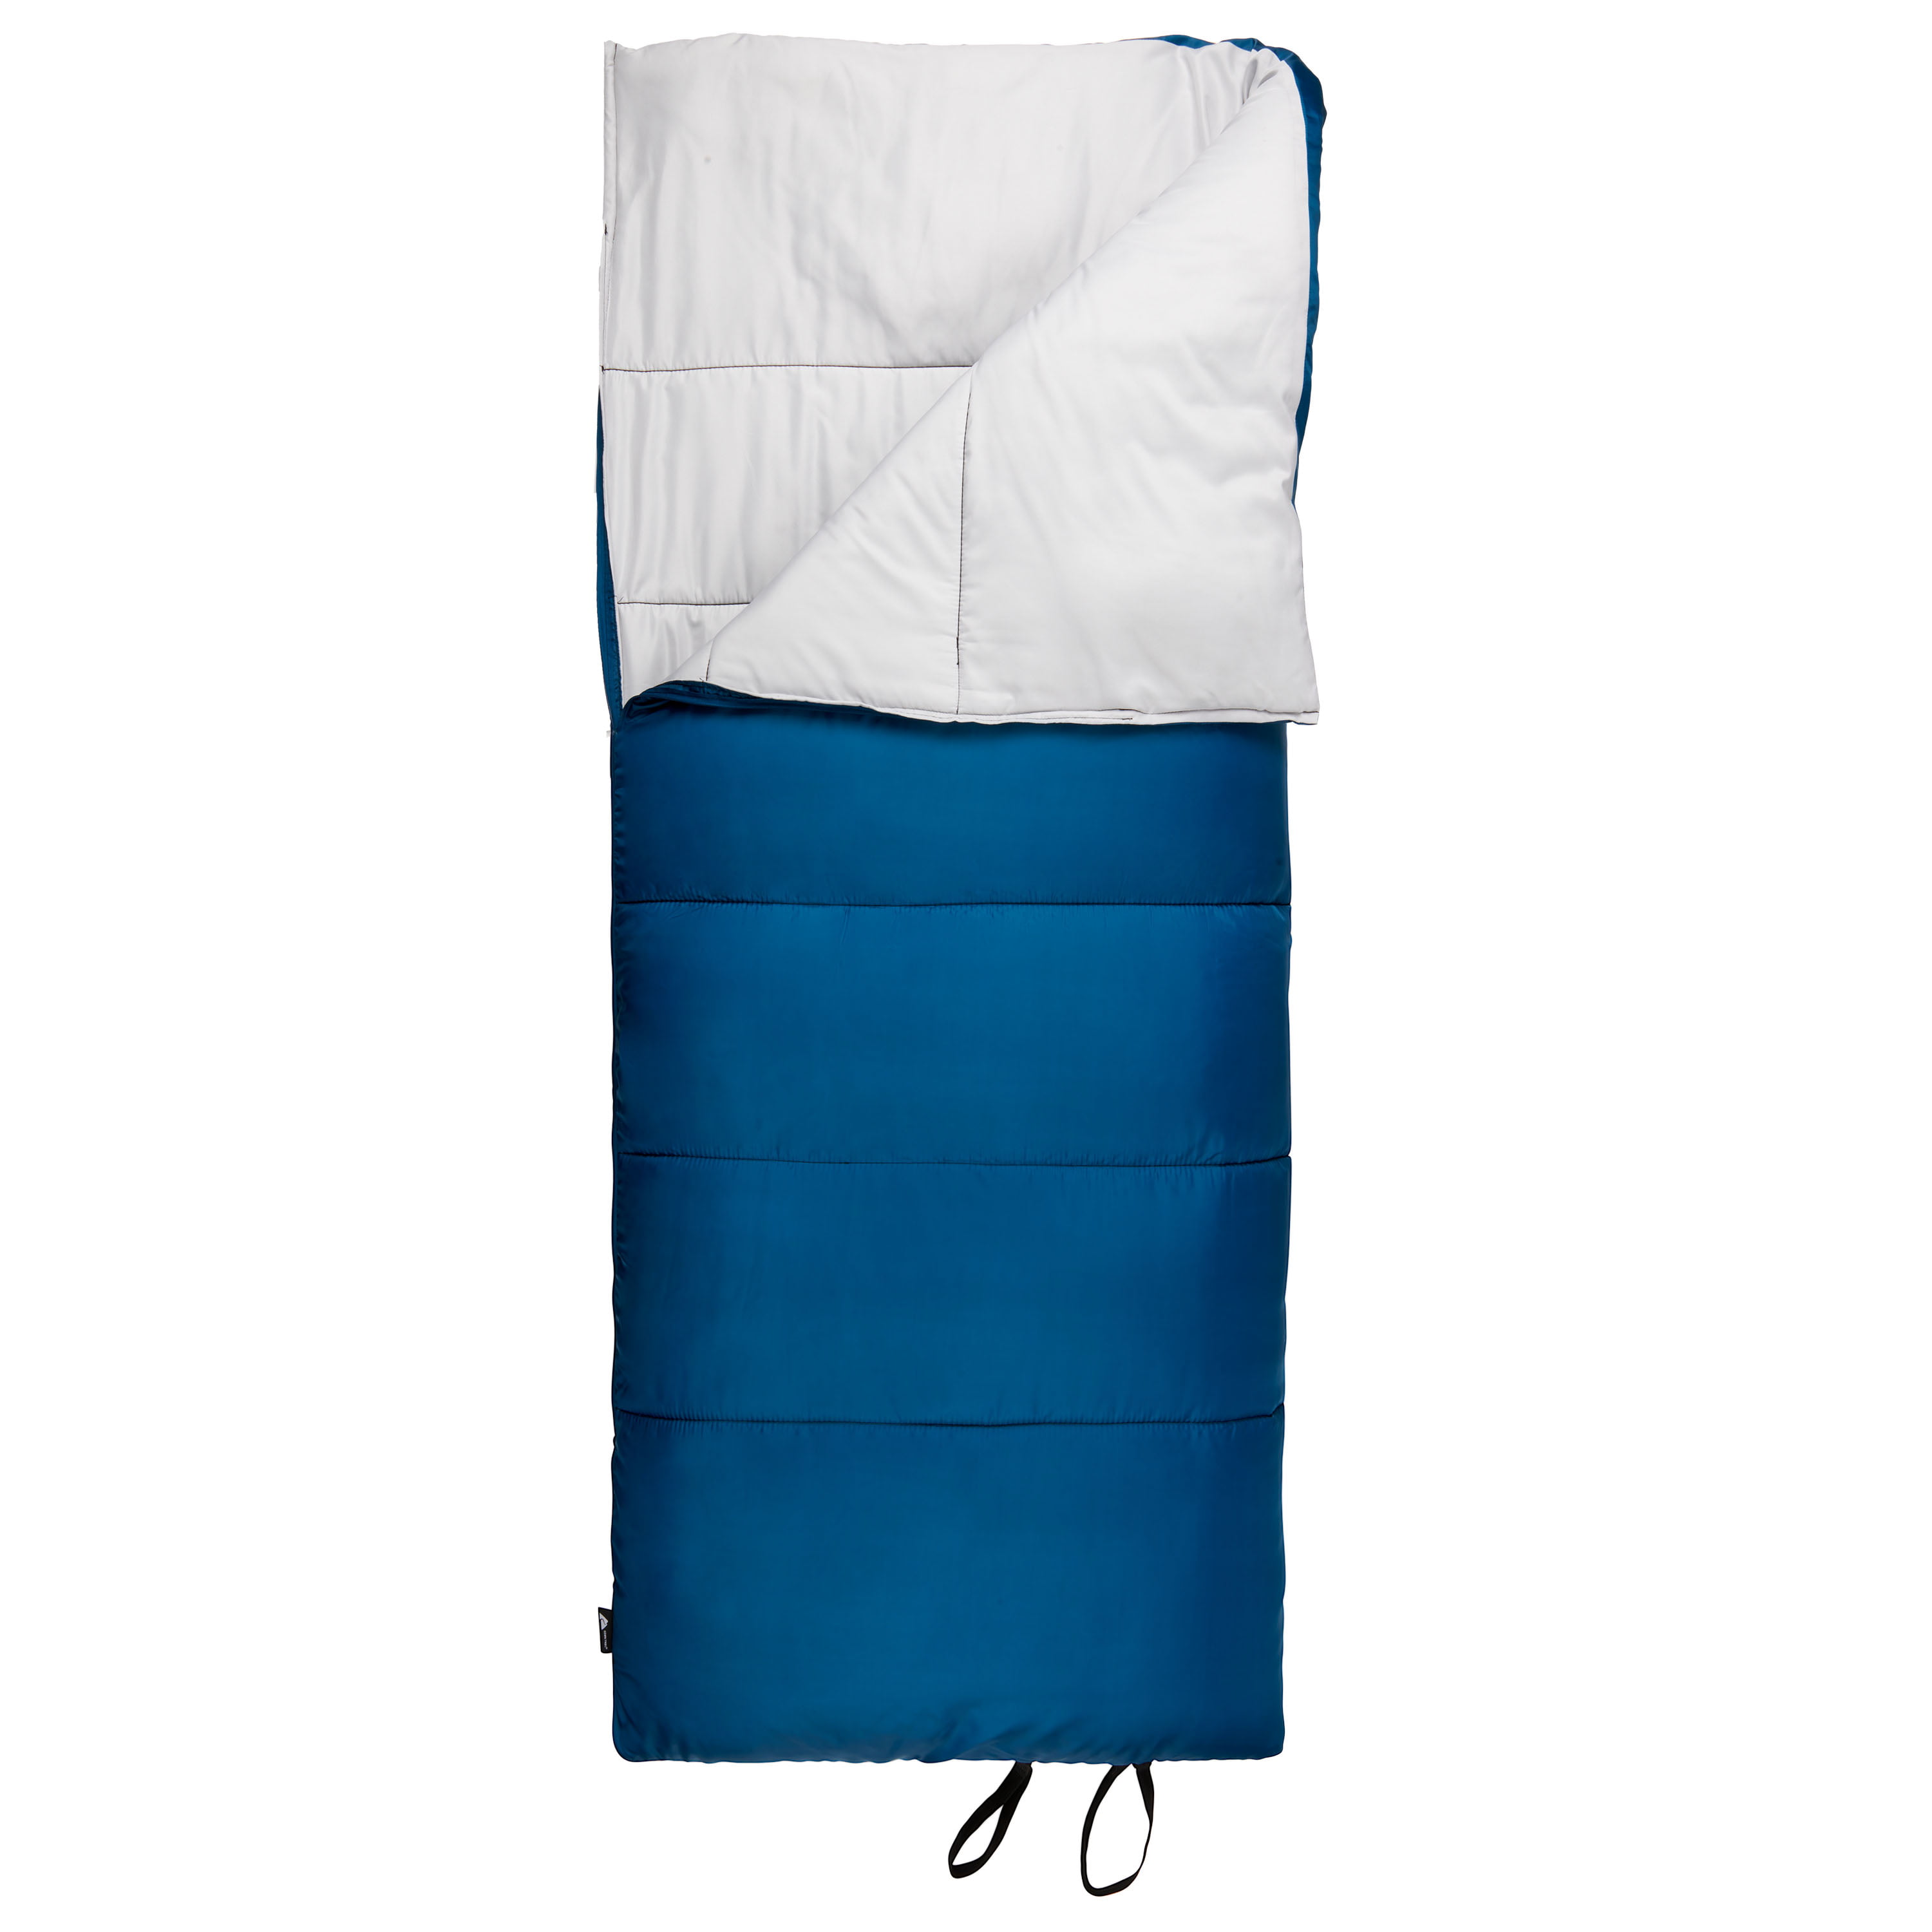 Blue Adult Sleeping Bag - 35°F